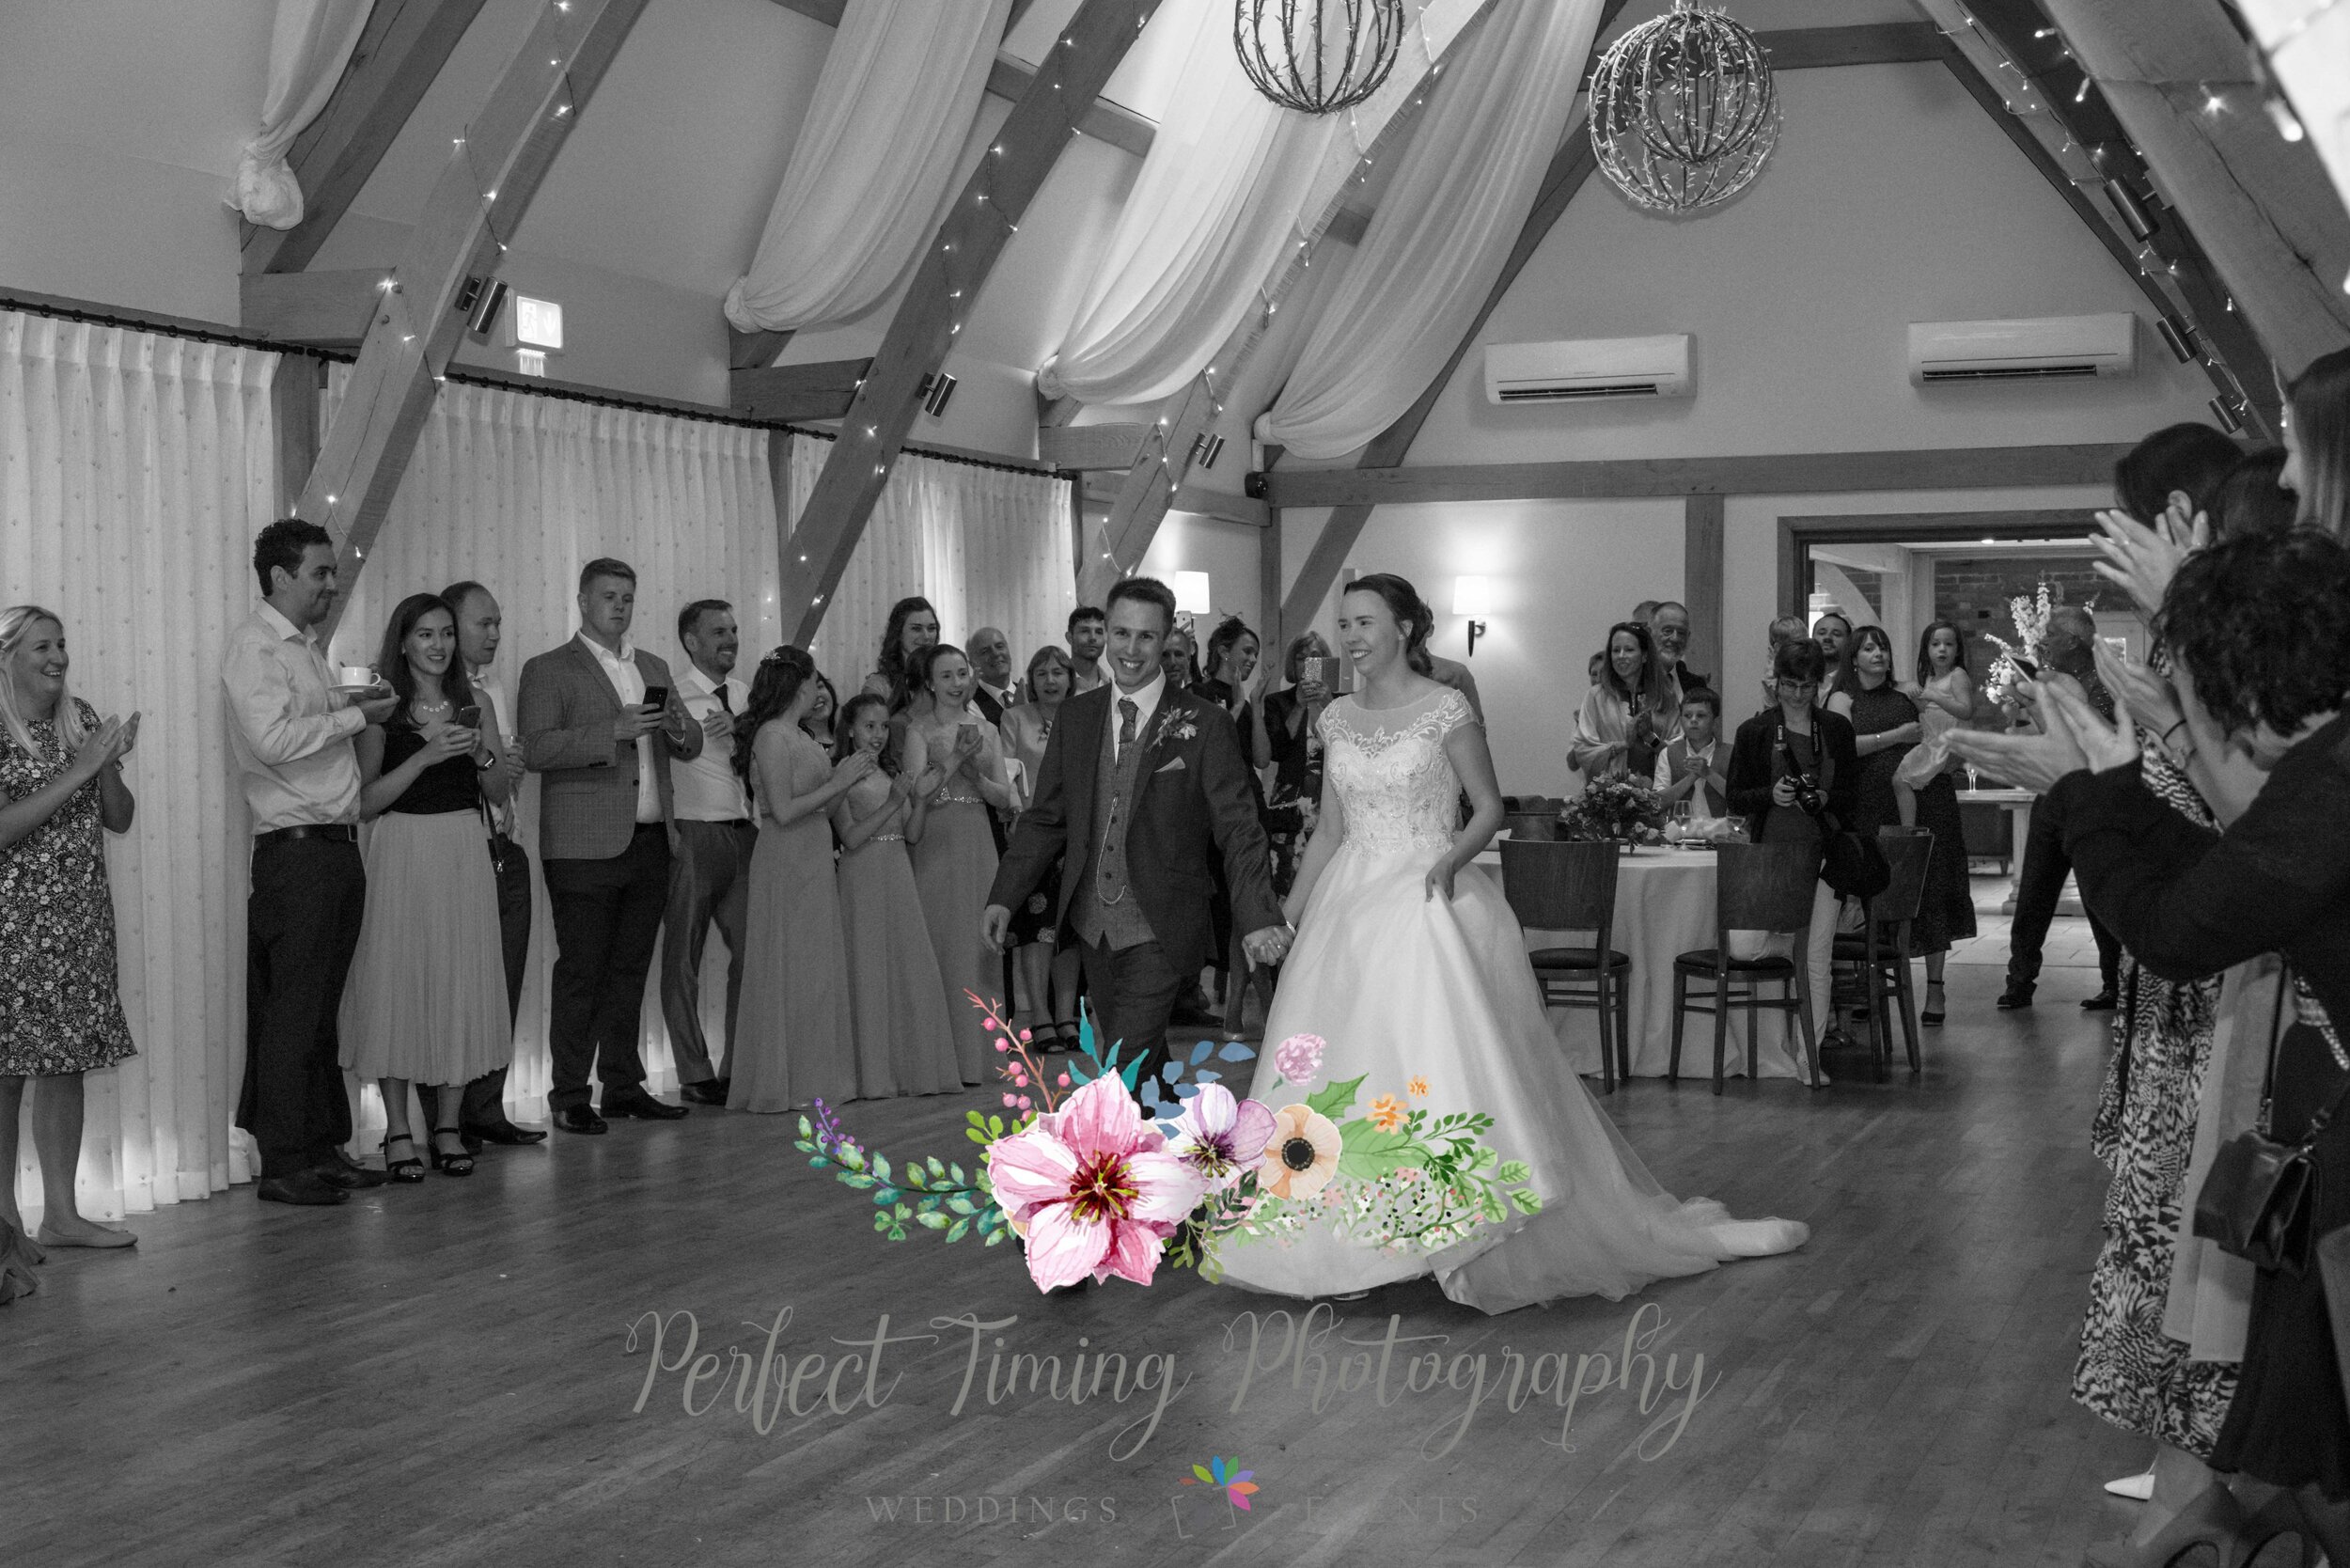 Perfect Timing Photography_wedding image_070.jpg